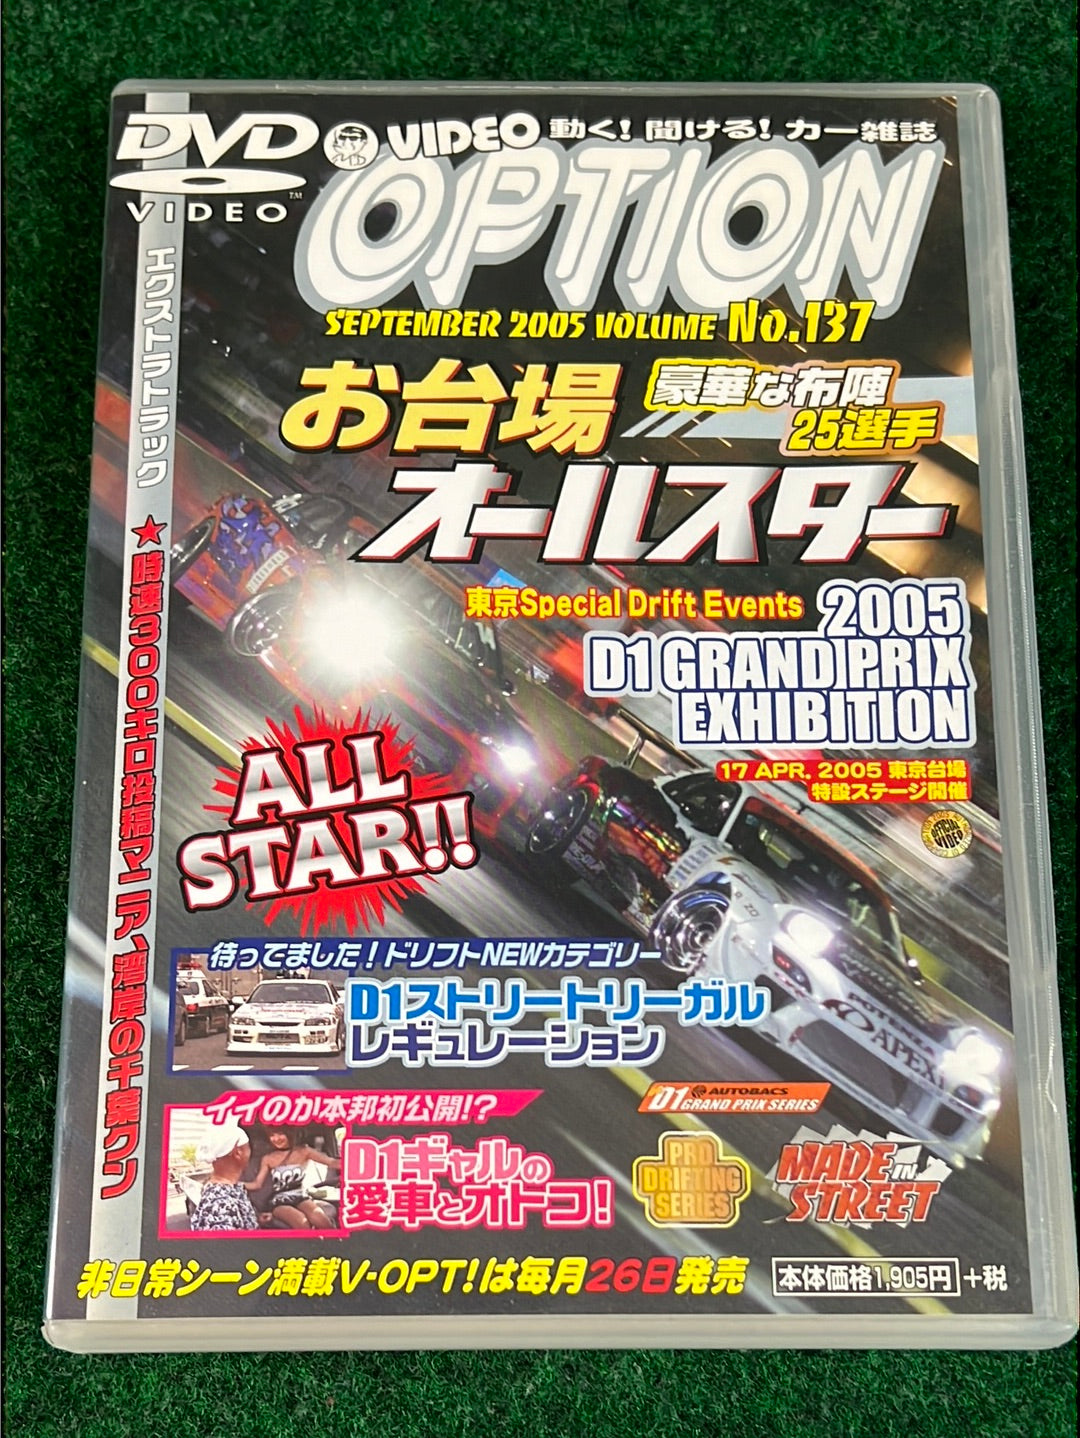 Option Video DVD - September 2005 Vol. 137 DVD